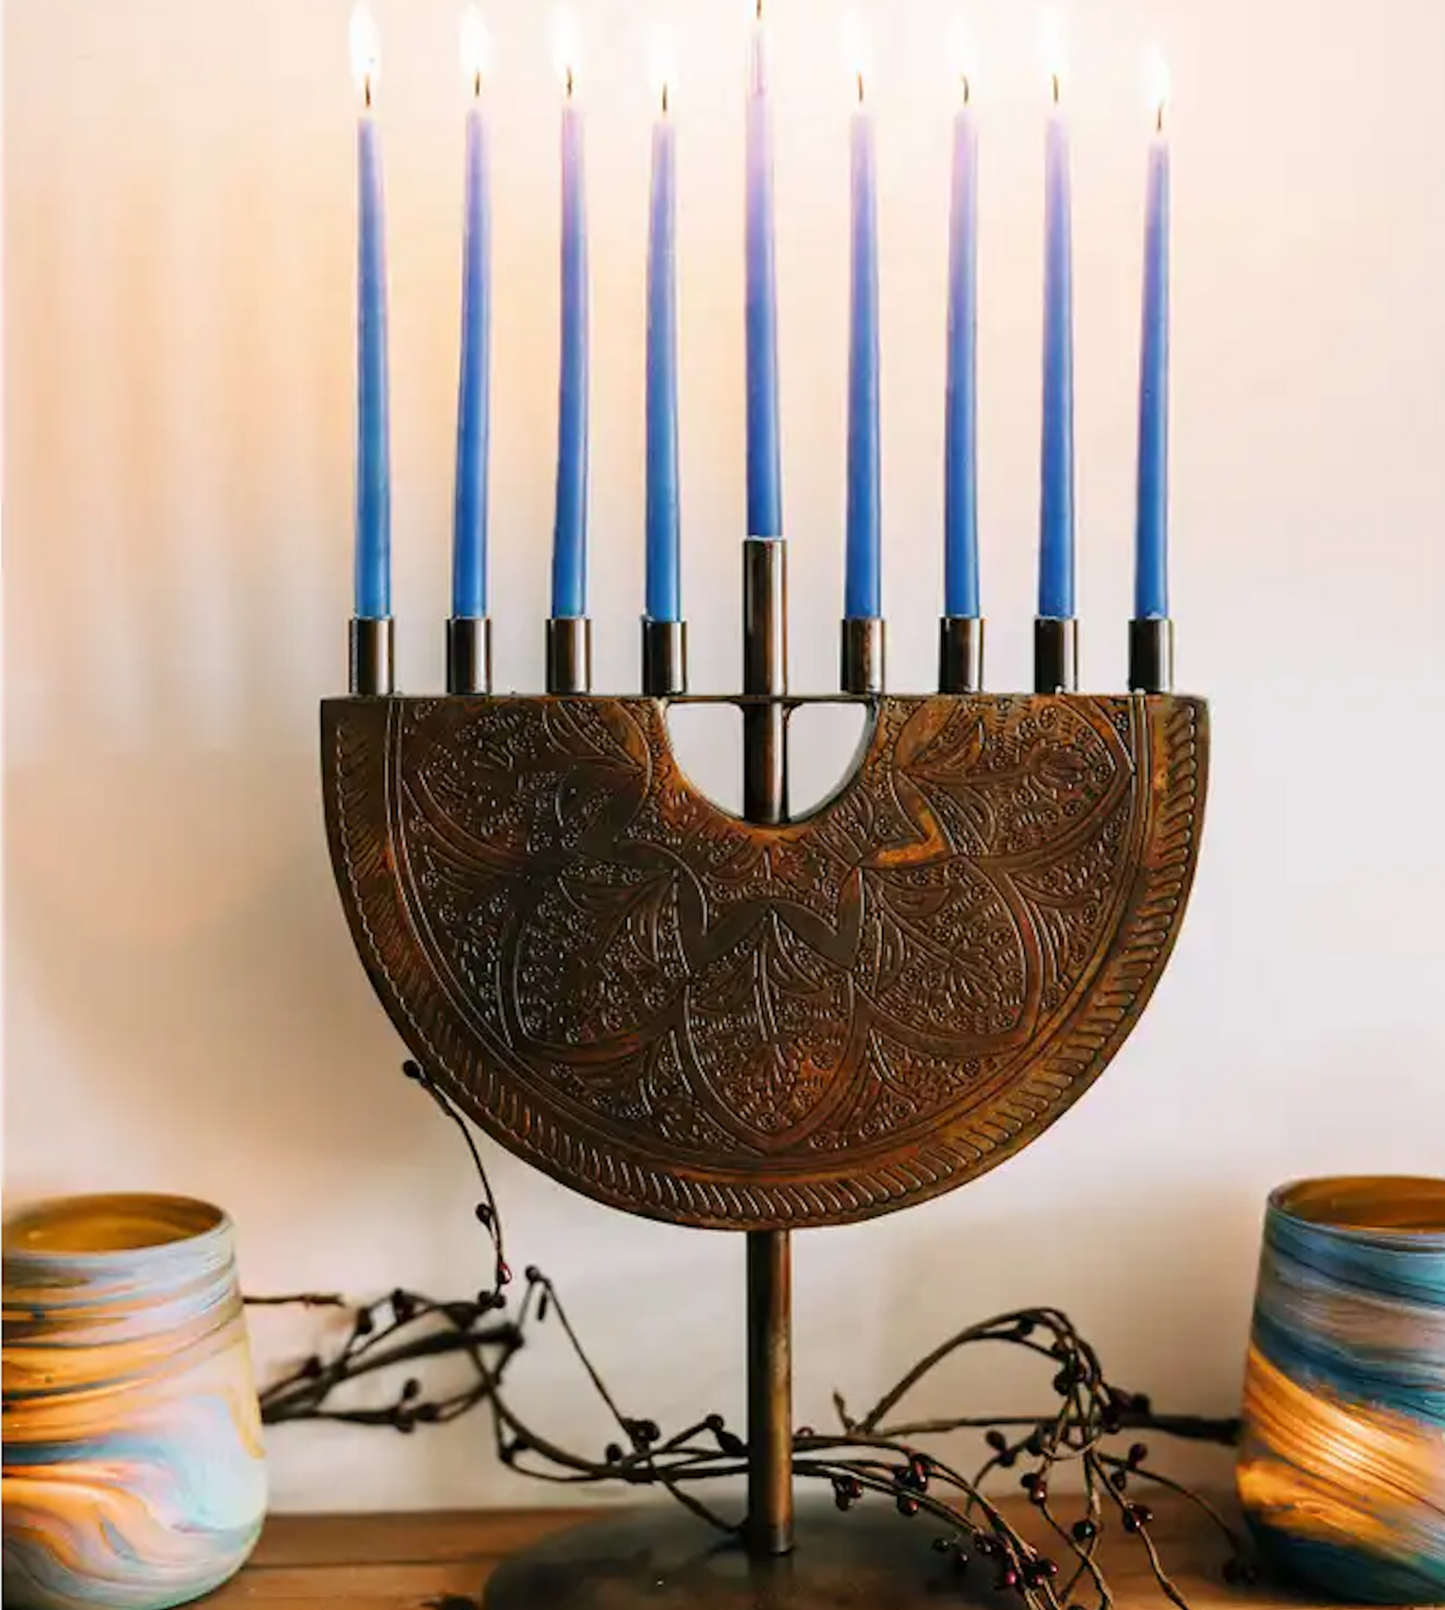 Engraved Iron Menorah - 9 Candle Chanukah, Jewish Hanukkah Lamp Holder - Aksa Home Decor 